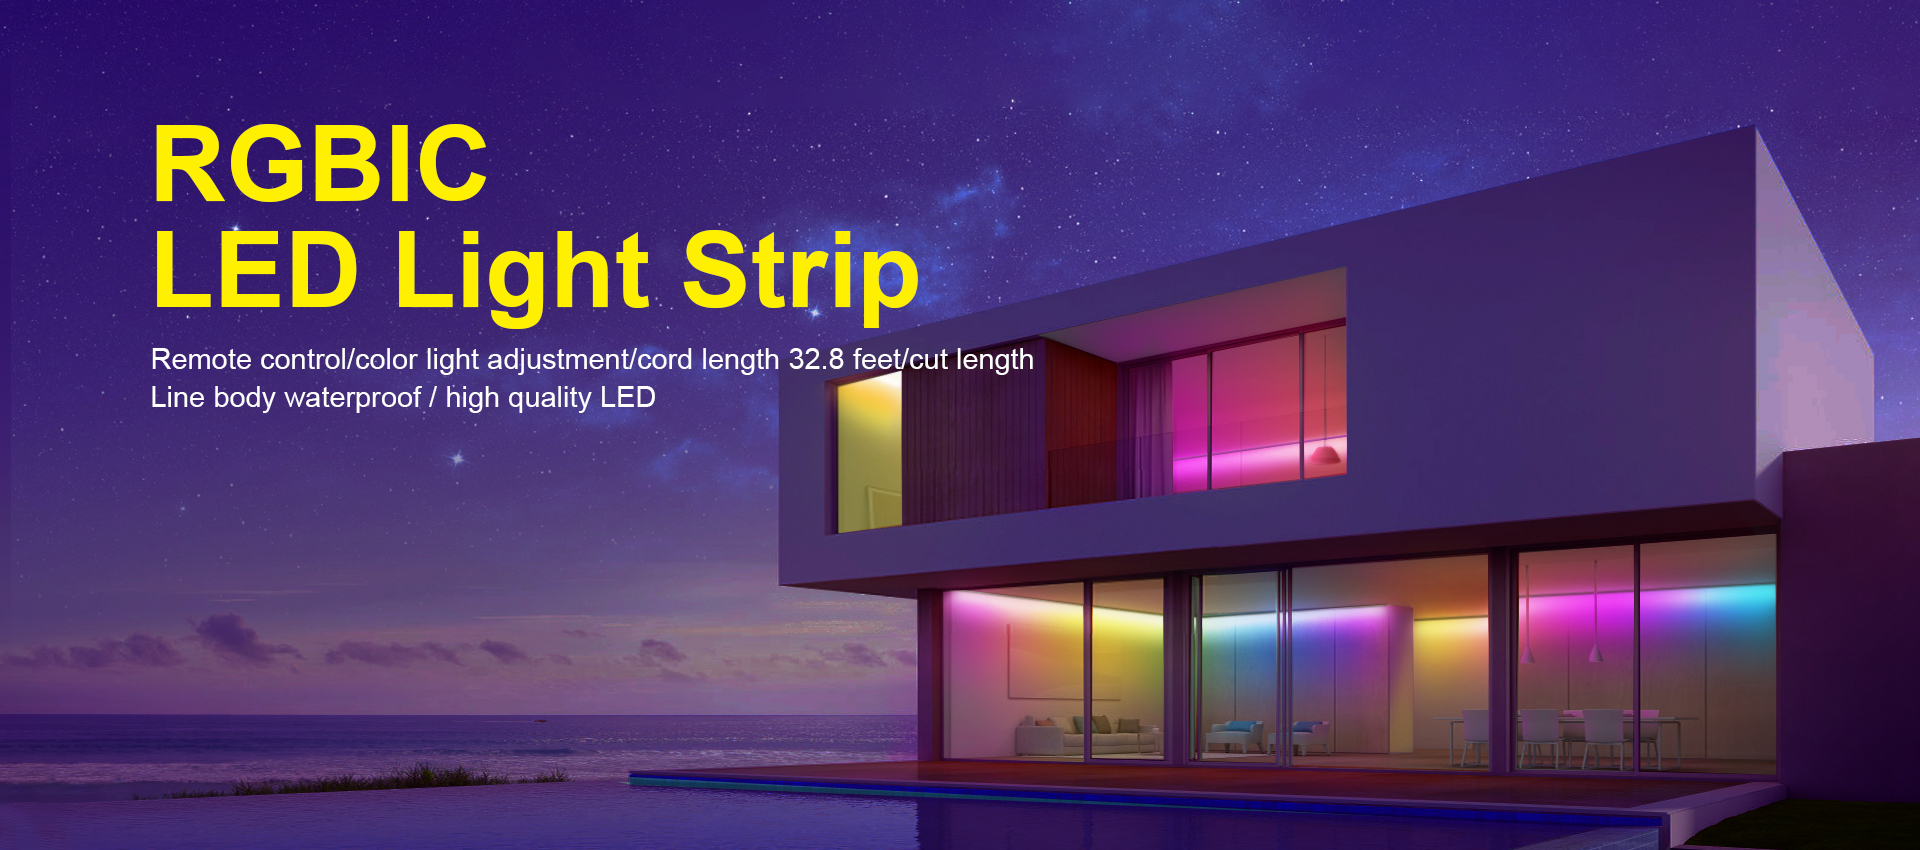 RGBIC LED Light Strip